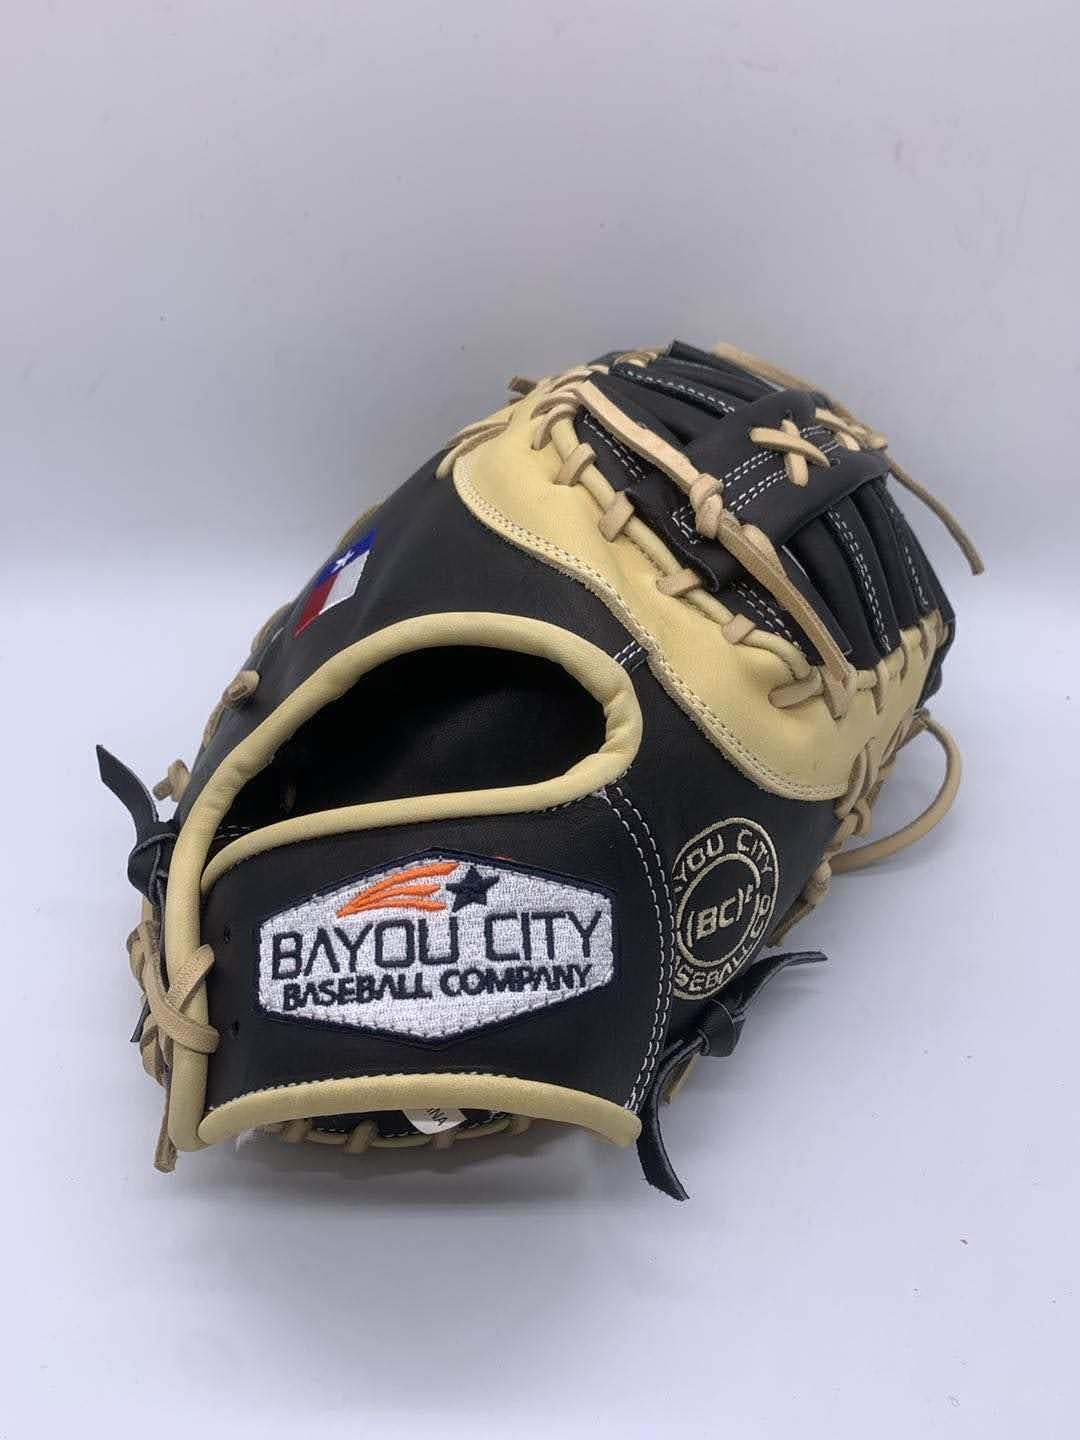 Shop Gloves and Apparel — Bayou City Baseball Company